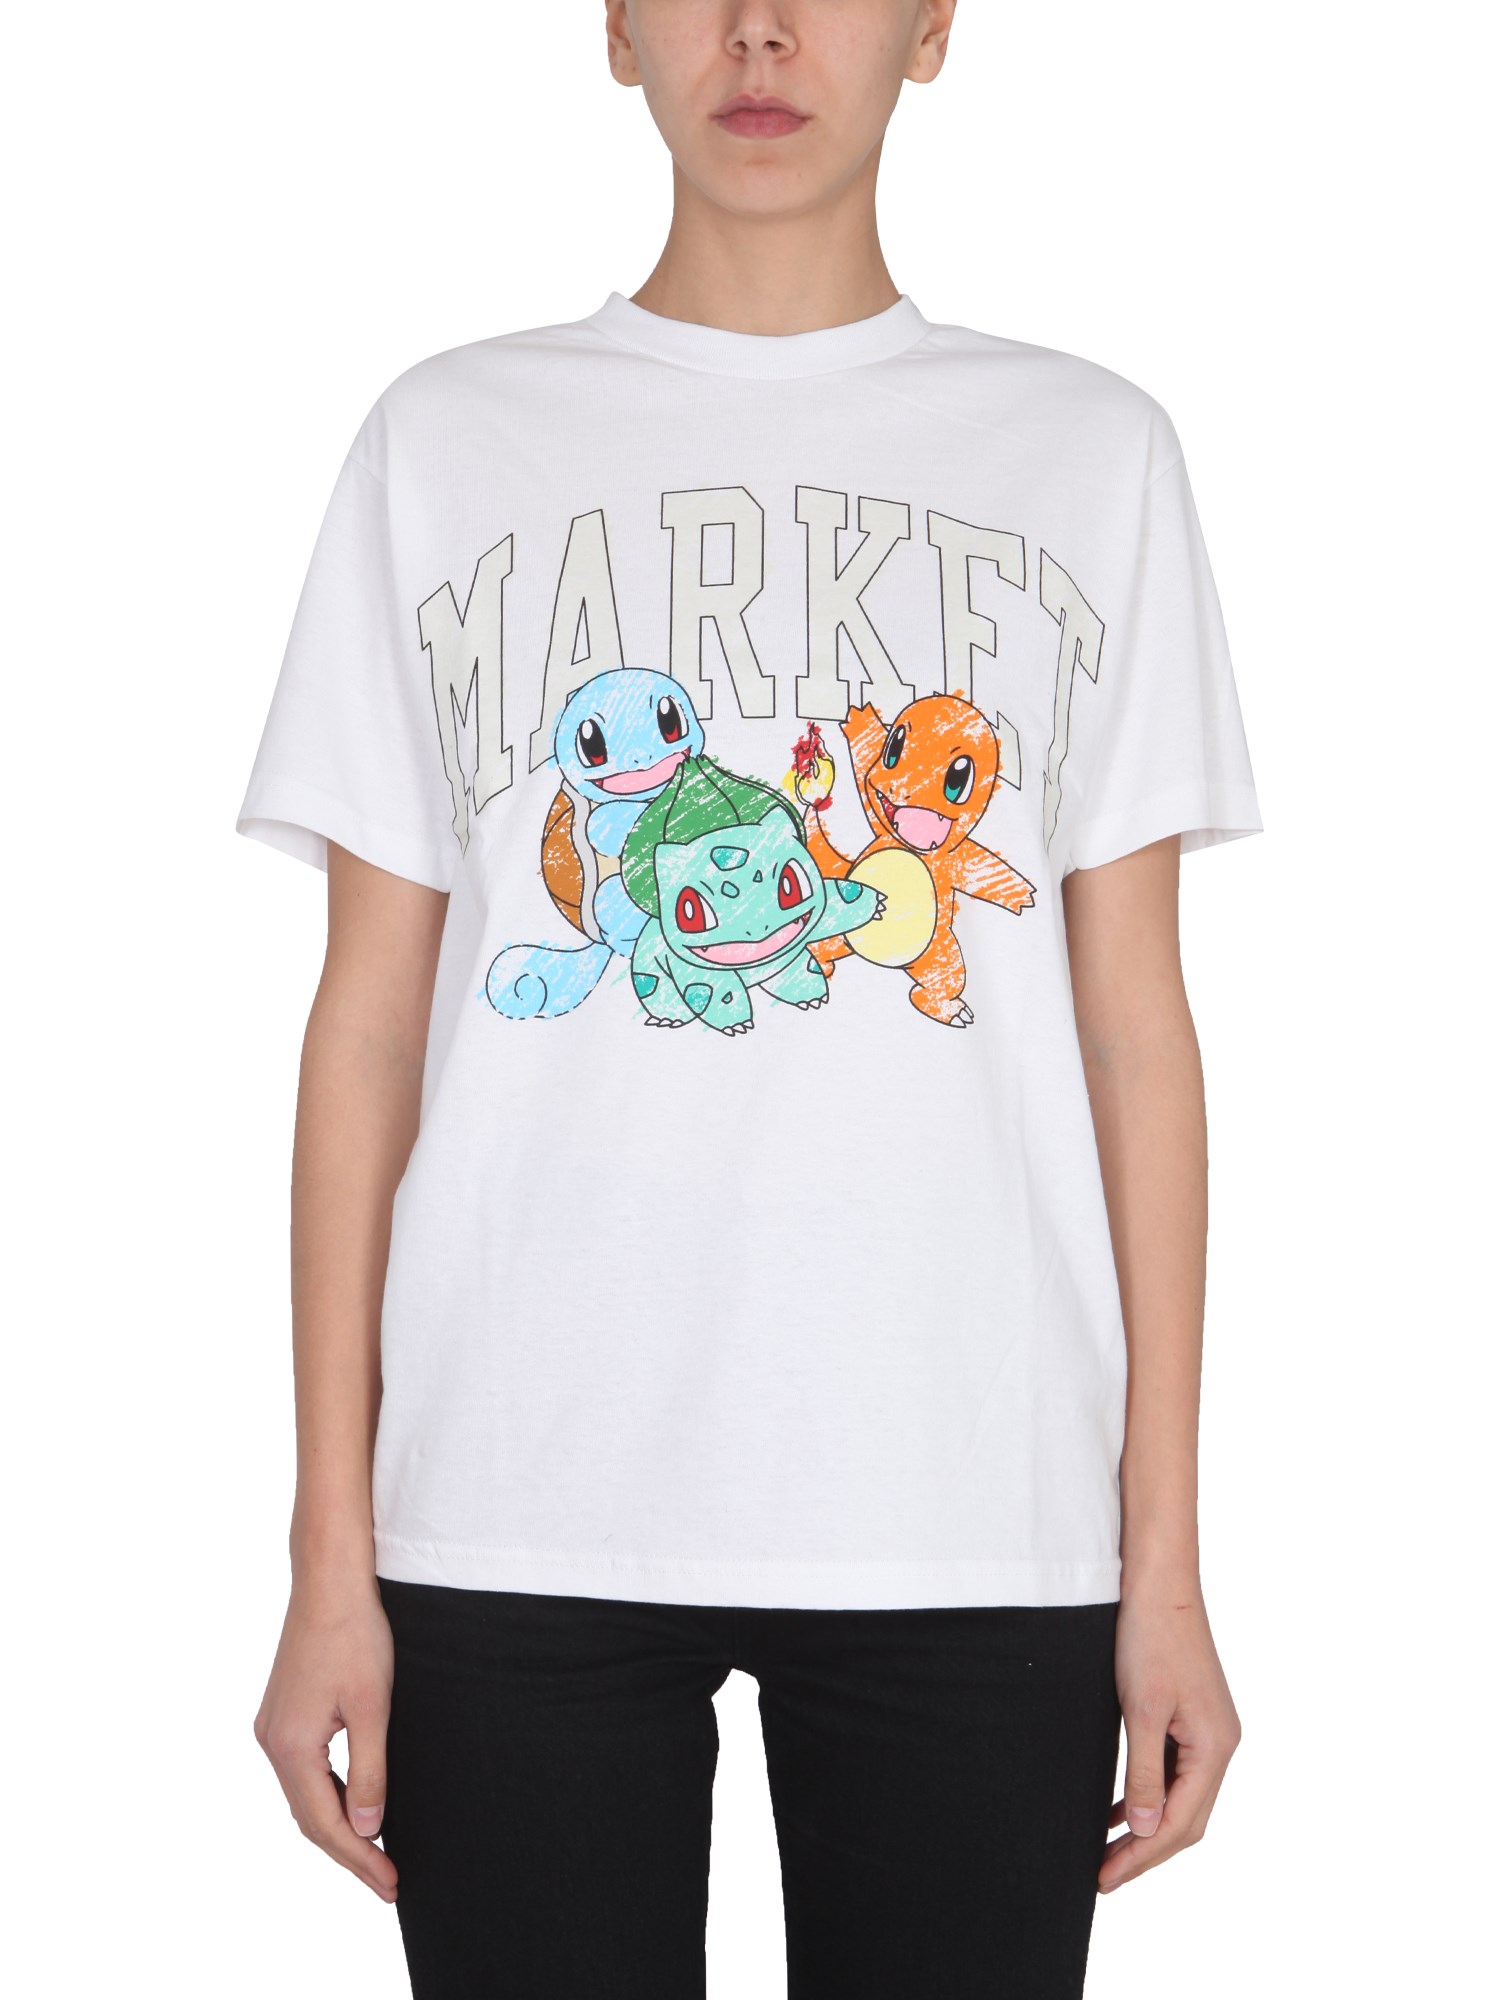 market "pokemon" t-shirt